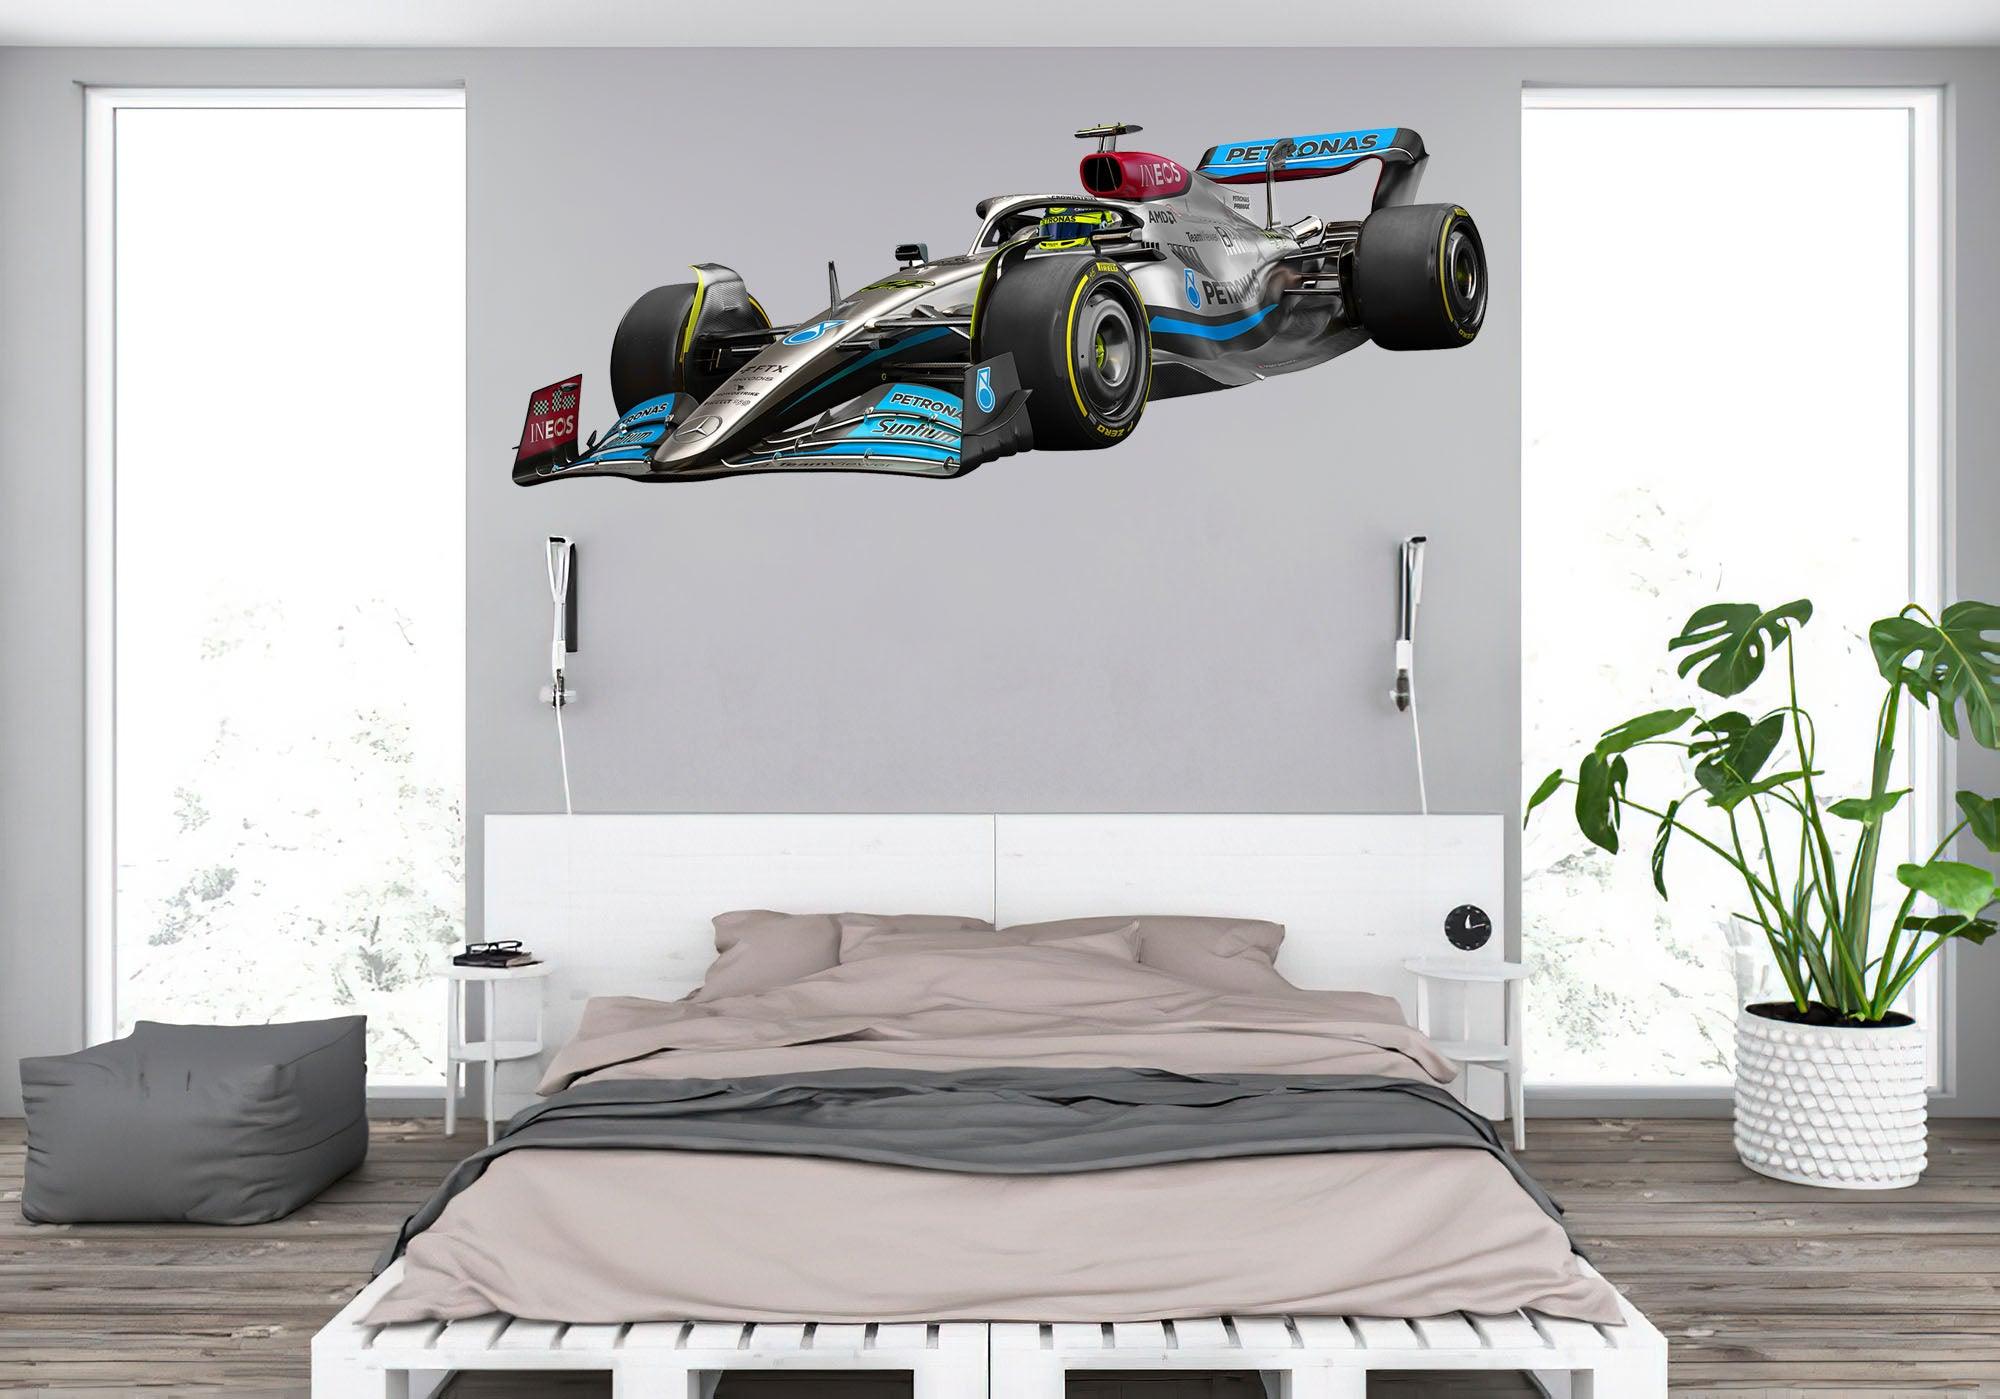 FORMULA 1 F1 Driver Lewis Hamilton, Mercedes 2022 Livery W13 Side View 022